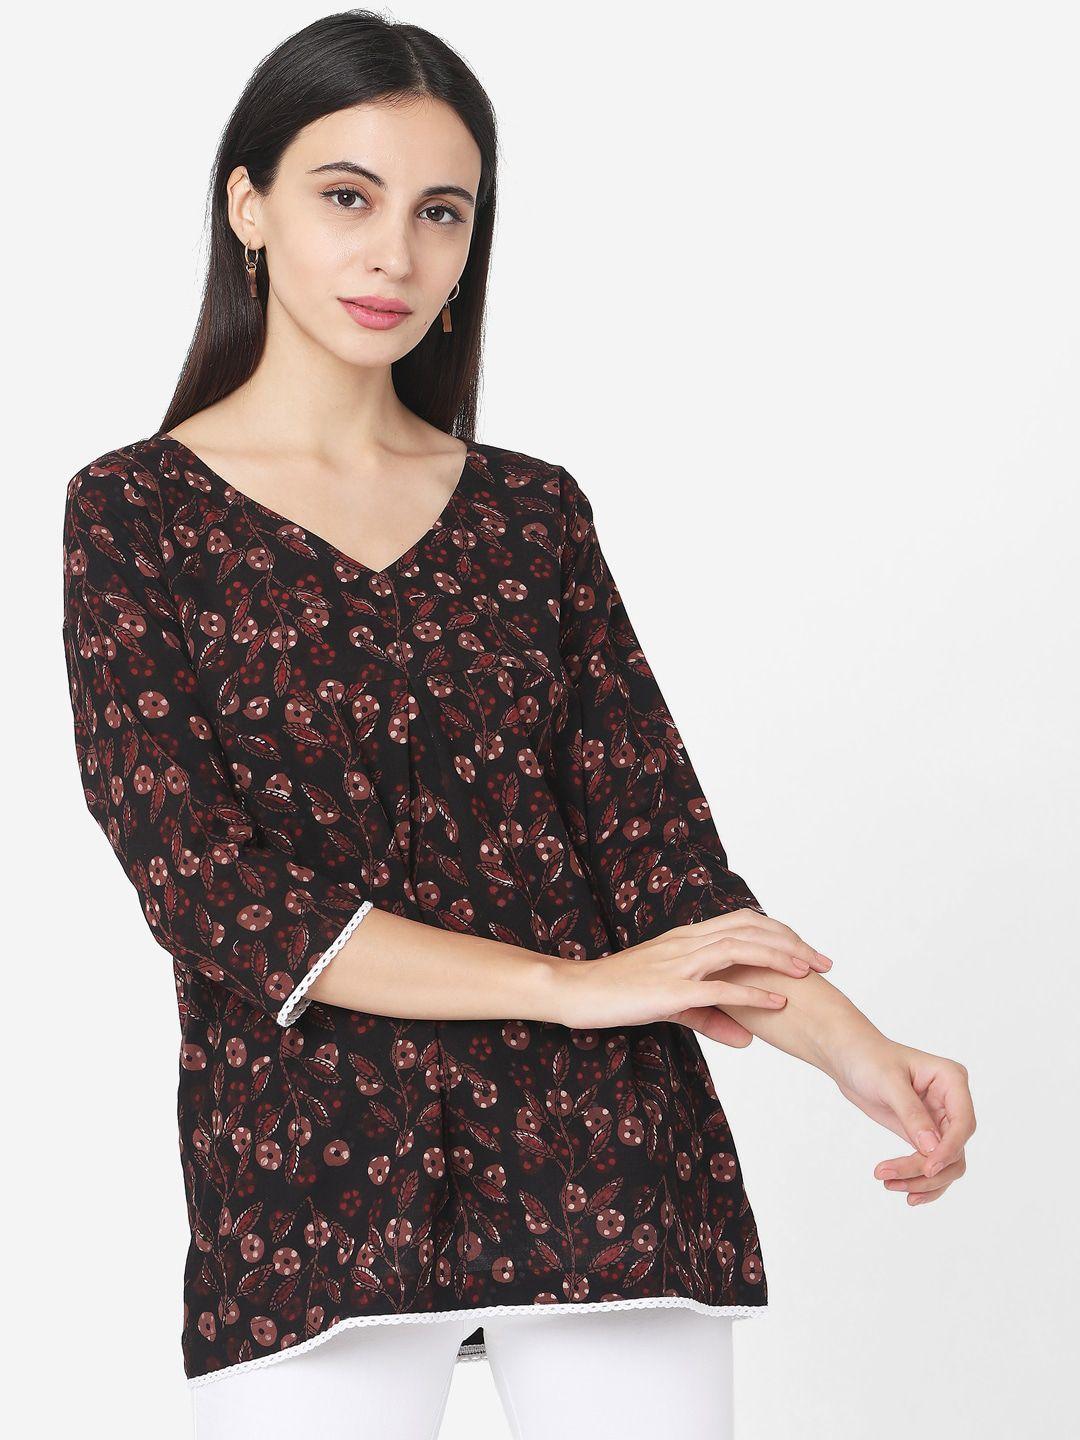 saanjh-women-black-&-maroon-floral-printed-tunic